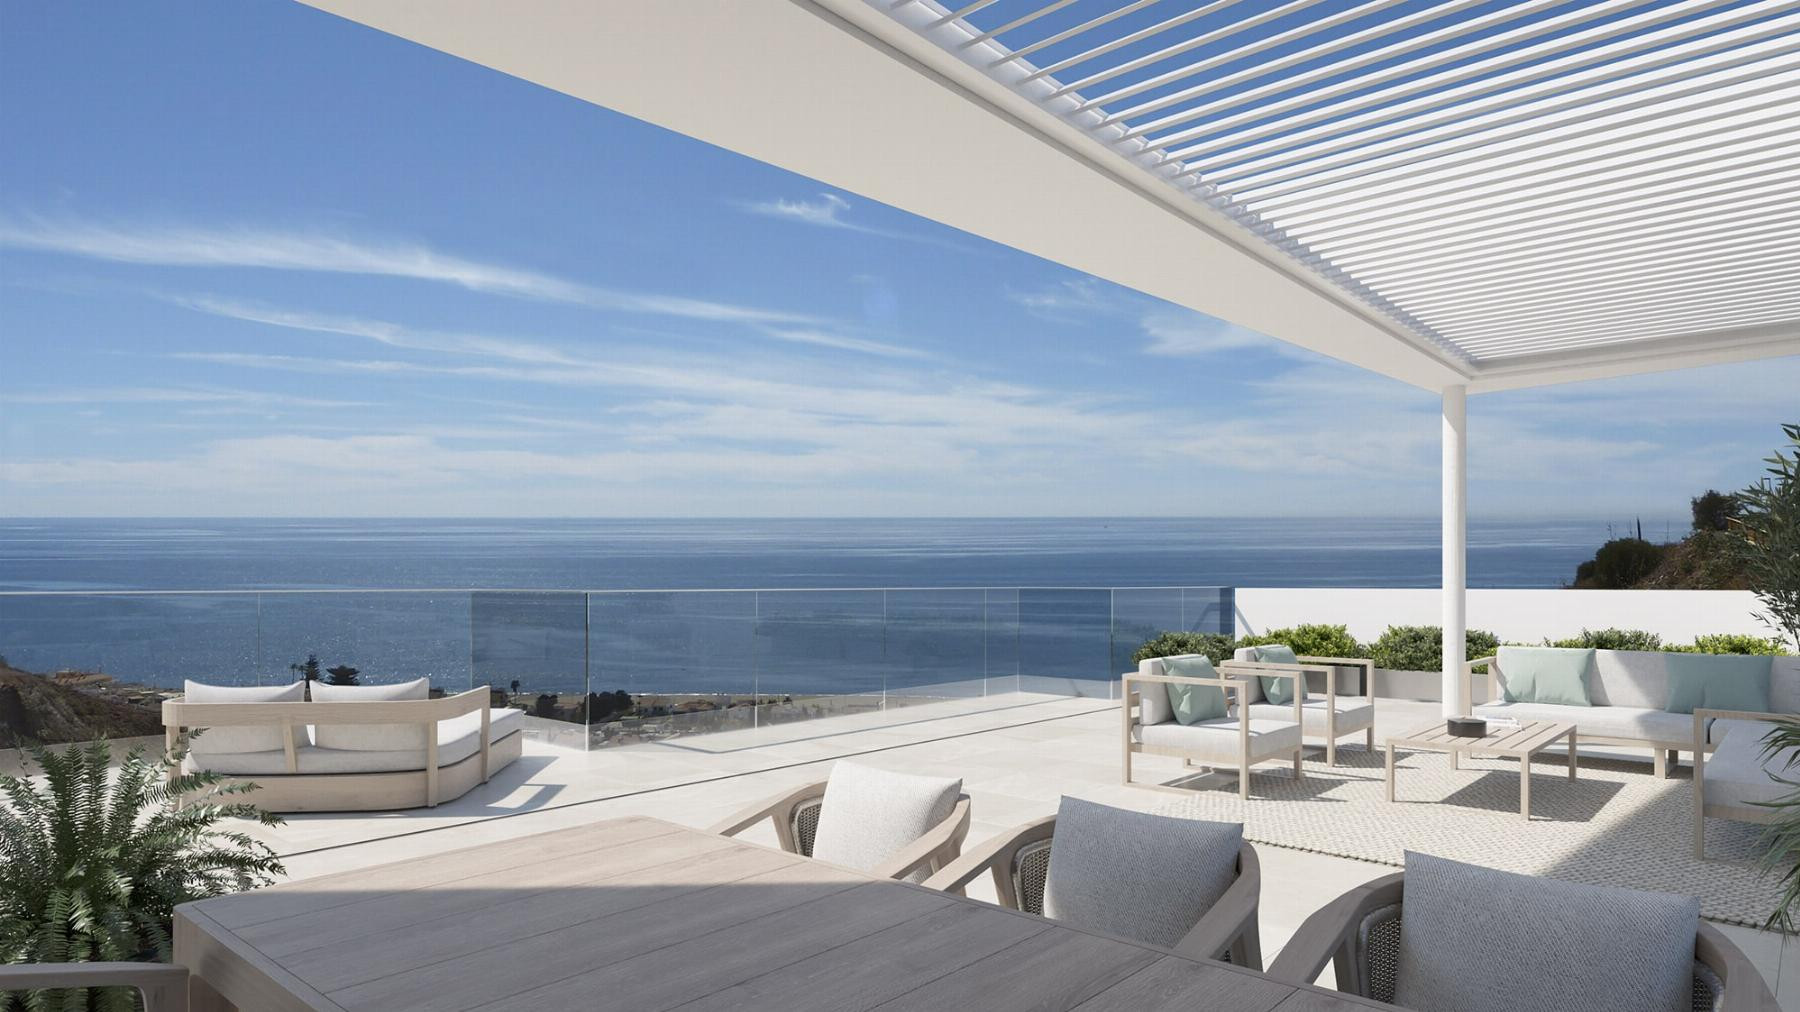 Idilia Mare: Apartments and penthouses with ocean views in Rincón de la Victoria.